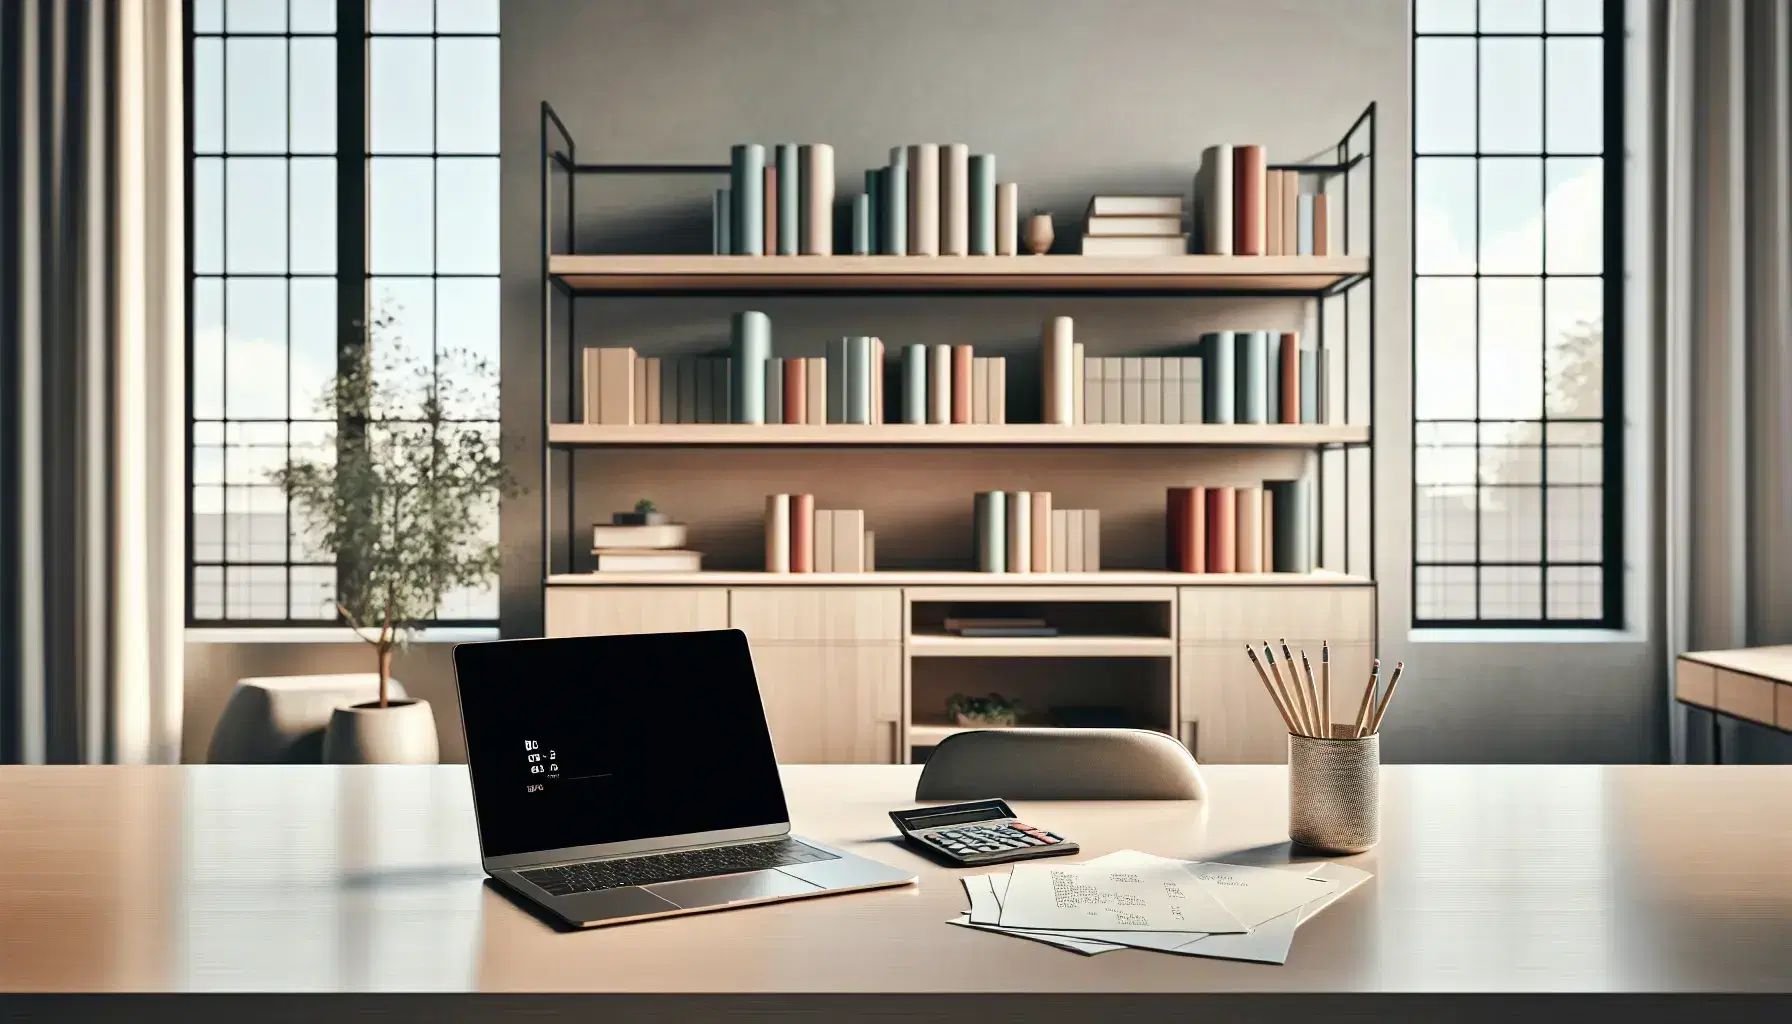 Oficina moderna iluminada con luz natural, mesa de madera con laptop, calculadora y papeles, estantería con libros y planta interior.